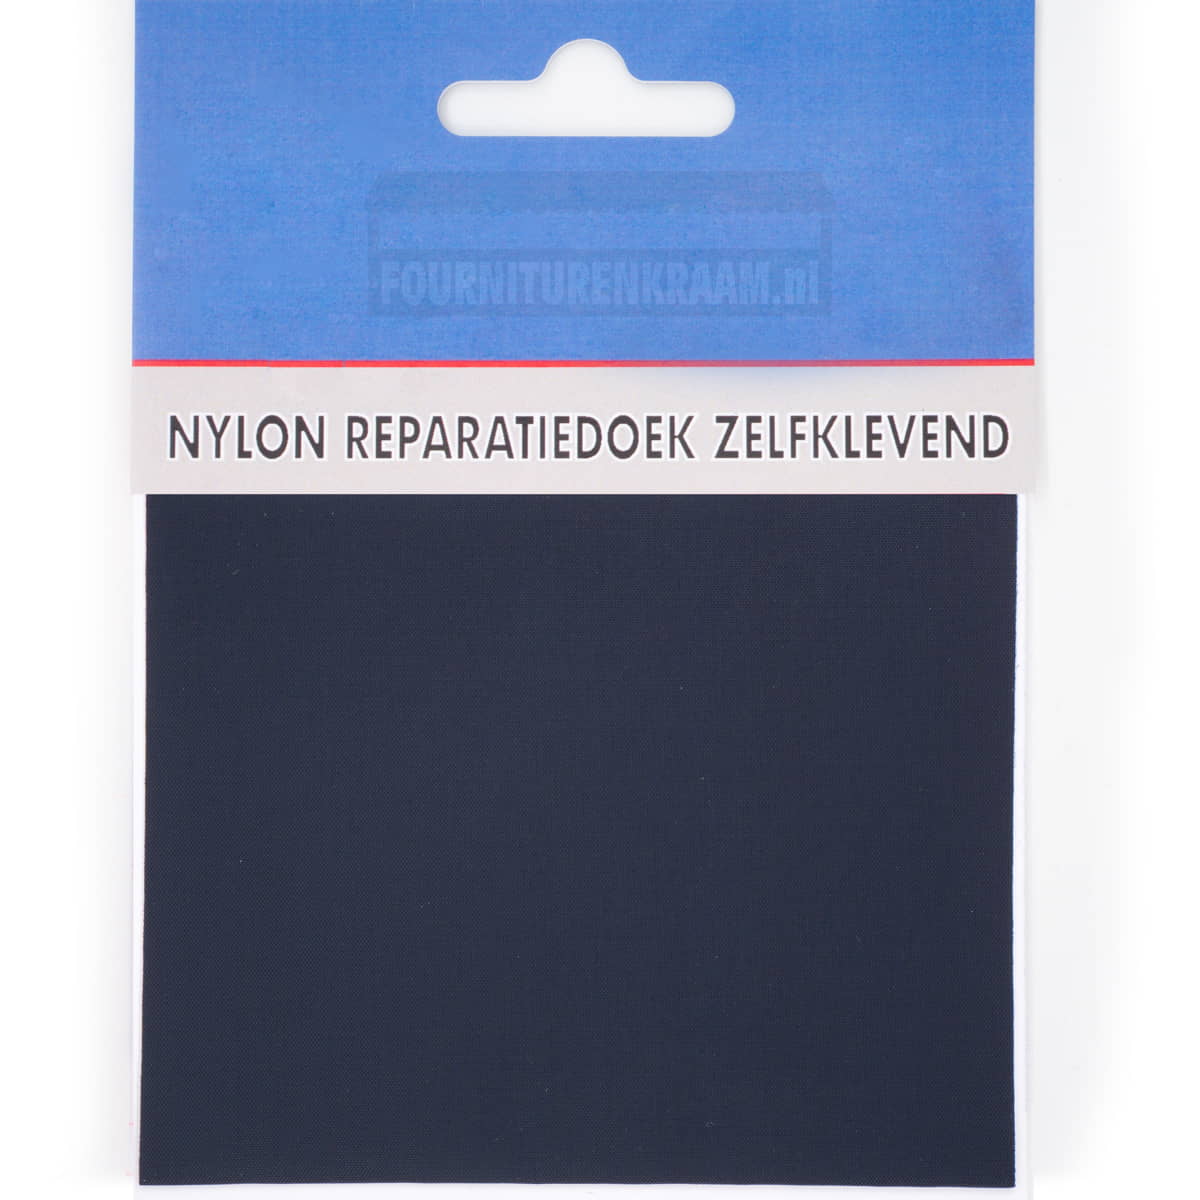 Zelfklevend repartiedoek huismerk | Nylon | 10 x 20 cm | donkerblauw NYLON-1114-06